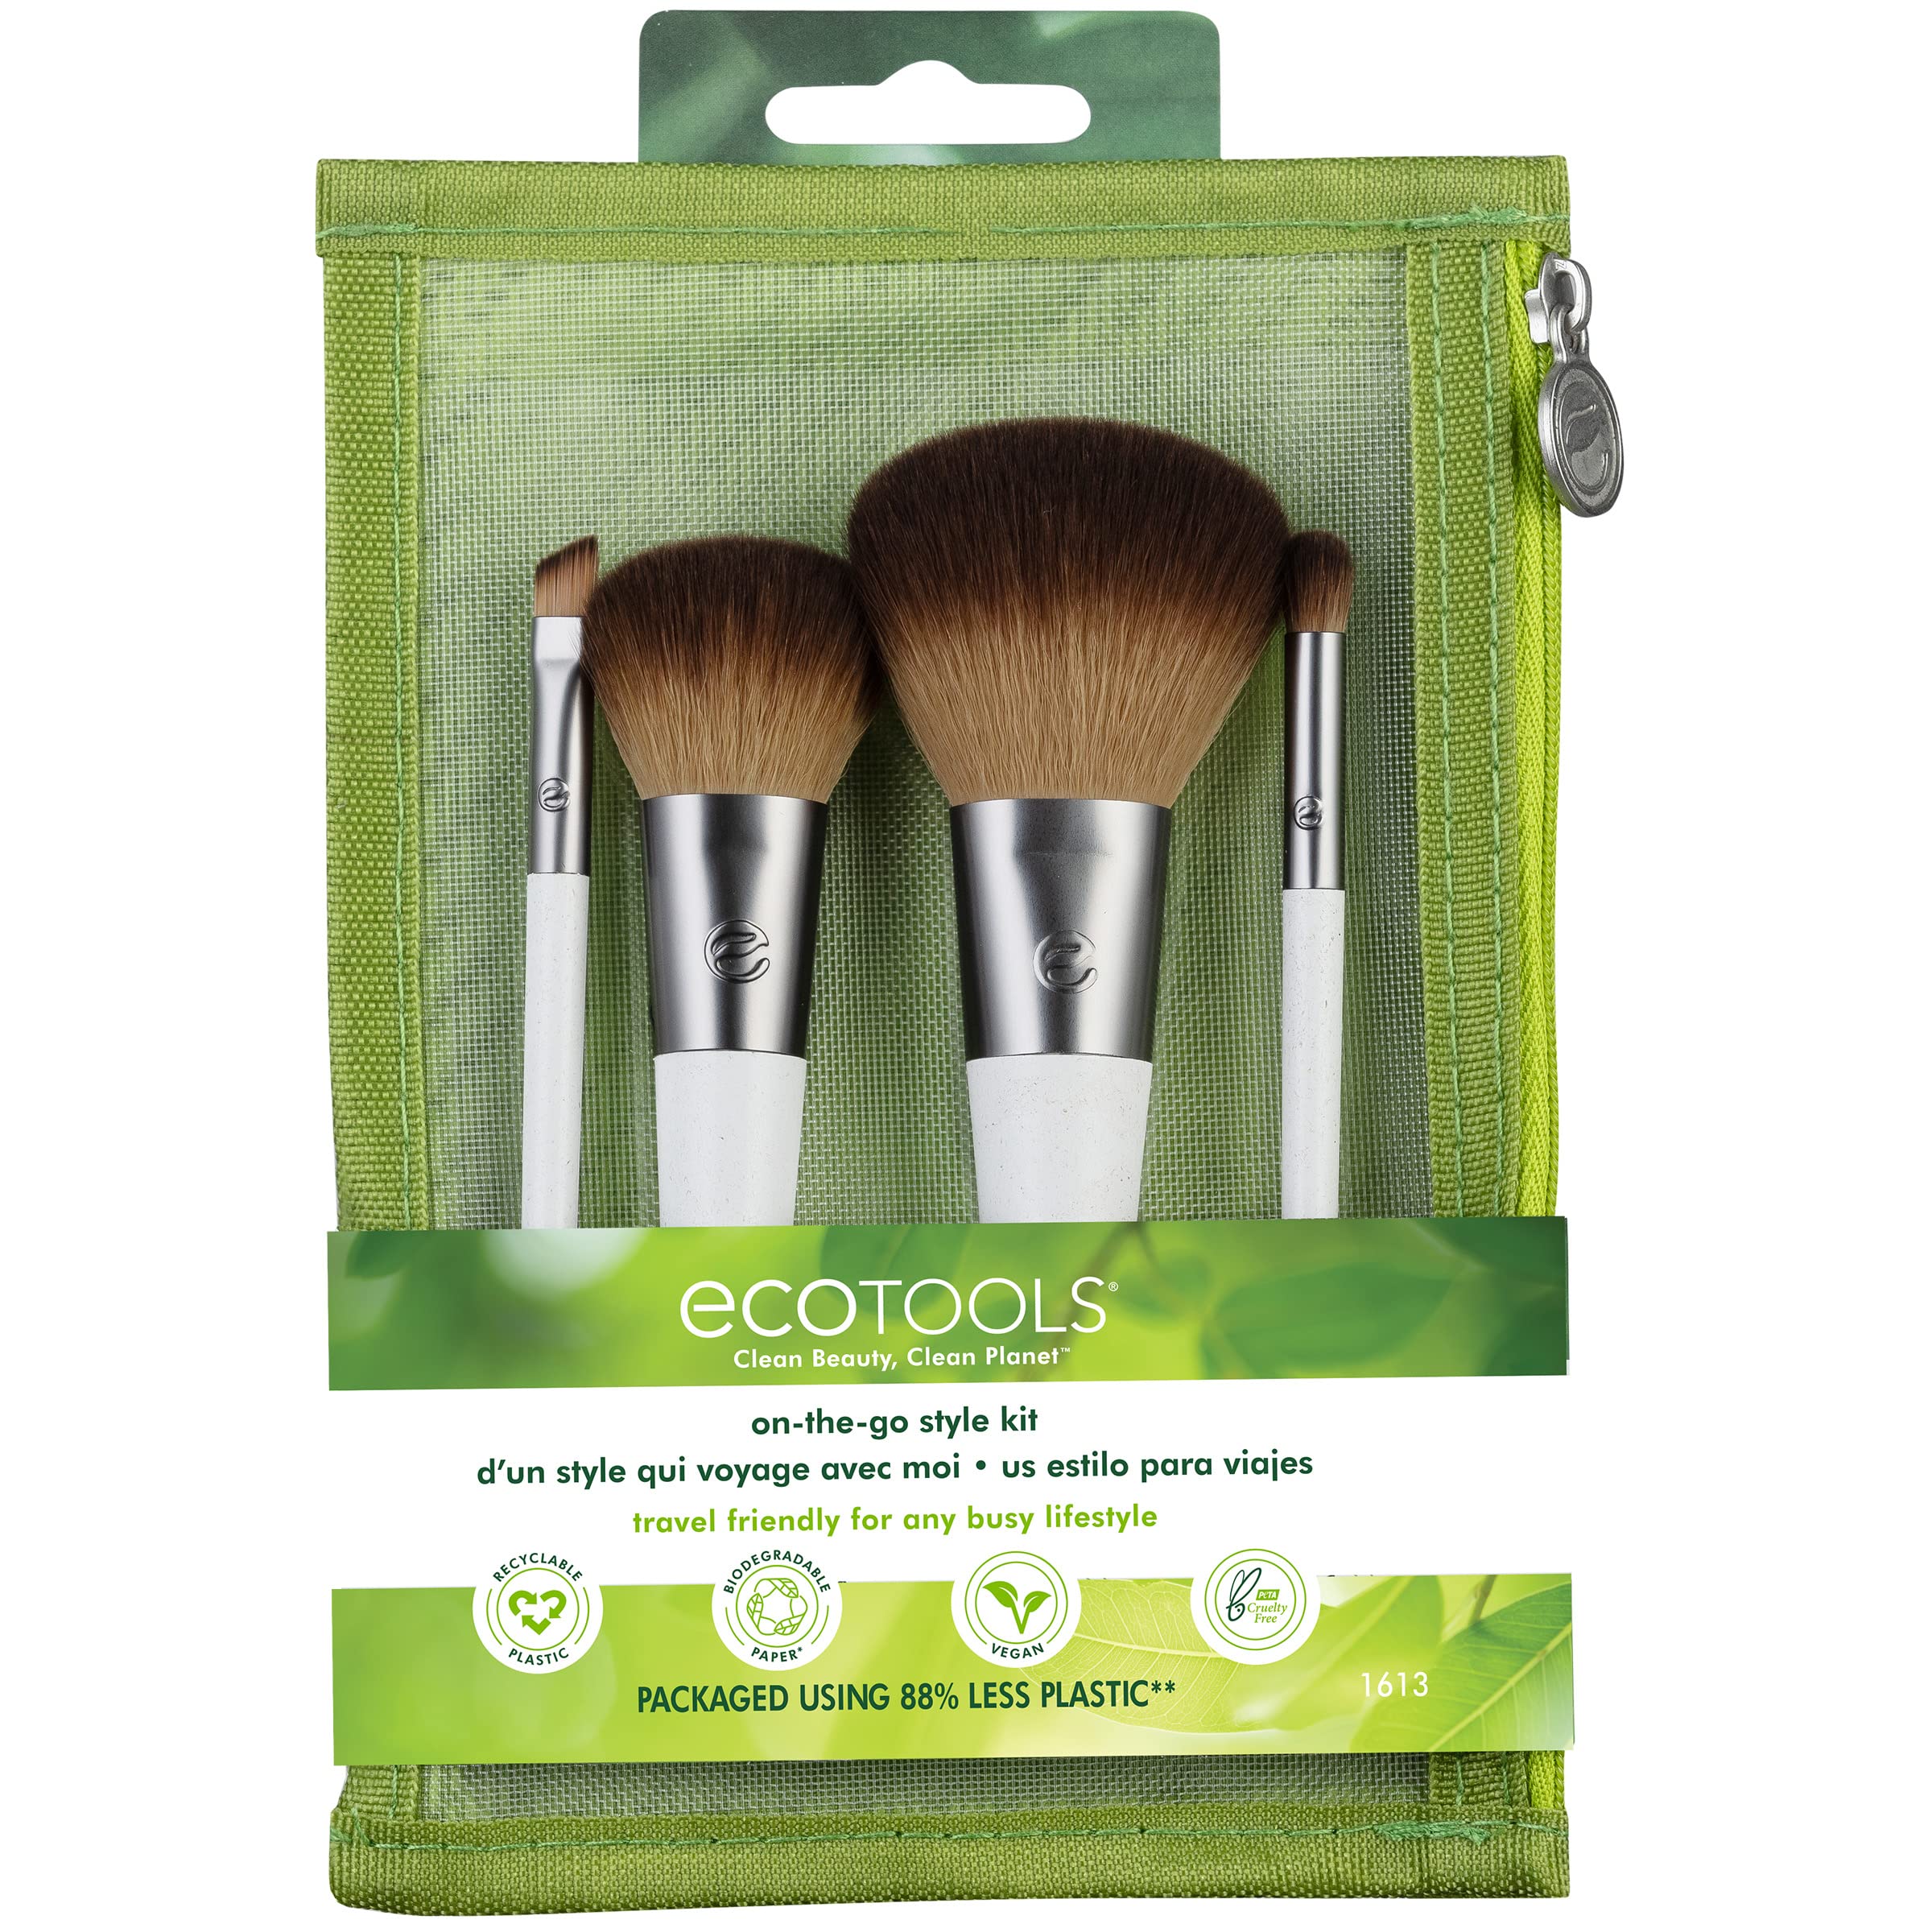 EcoTools On-The-Go Makeup Brush Kit, Travel-Friendly Brush Set, Convenient Makeup Tools for Powders, Blush, Bronzer, & Eyeshadows, Eco-Friendly, Synthetic Bristles, Cruelty-Free & Vegan, 5 Piece Set